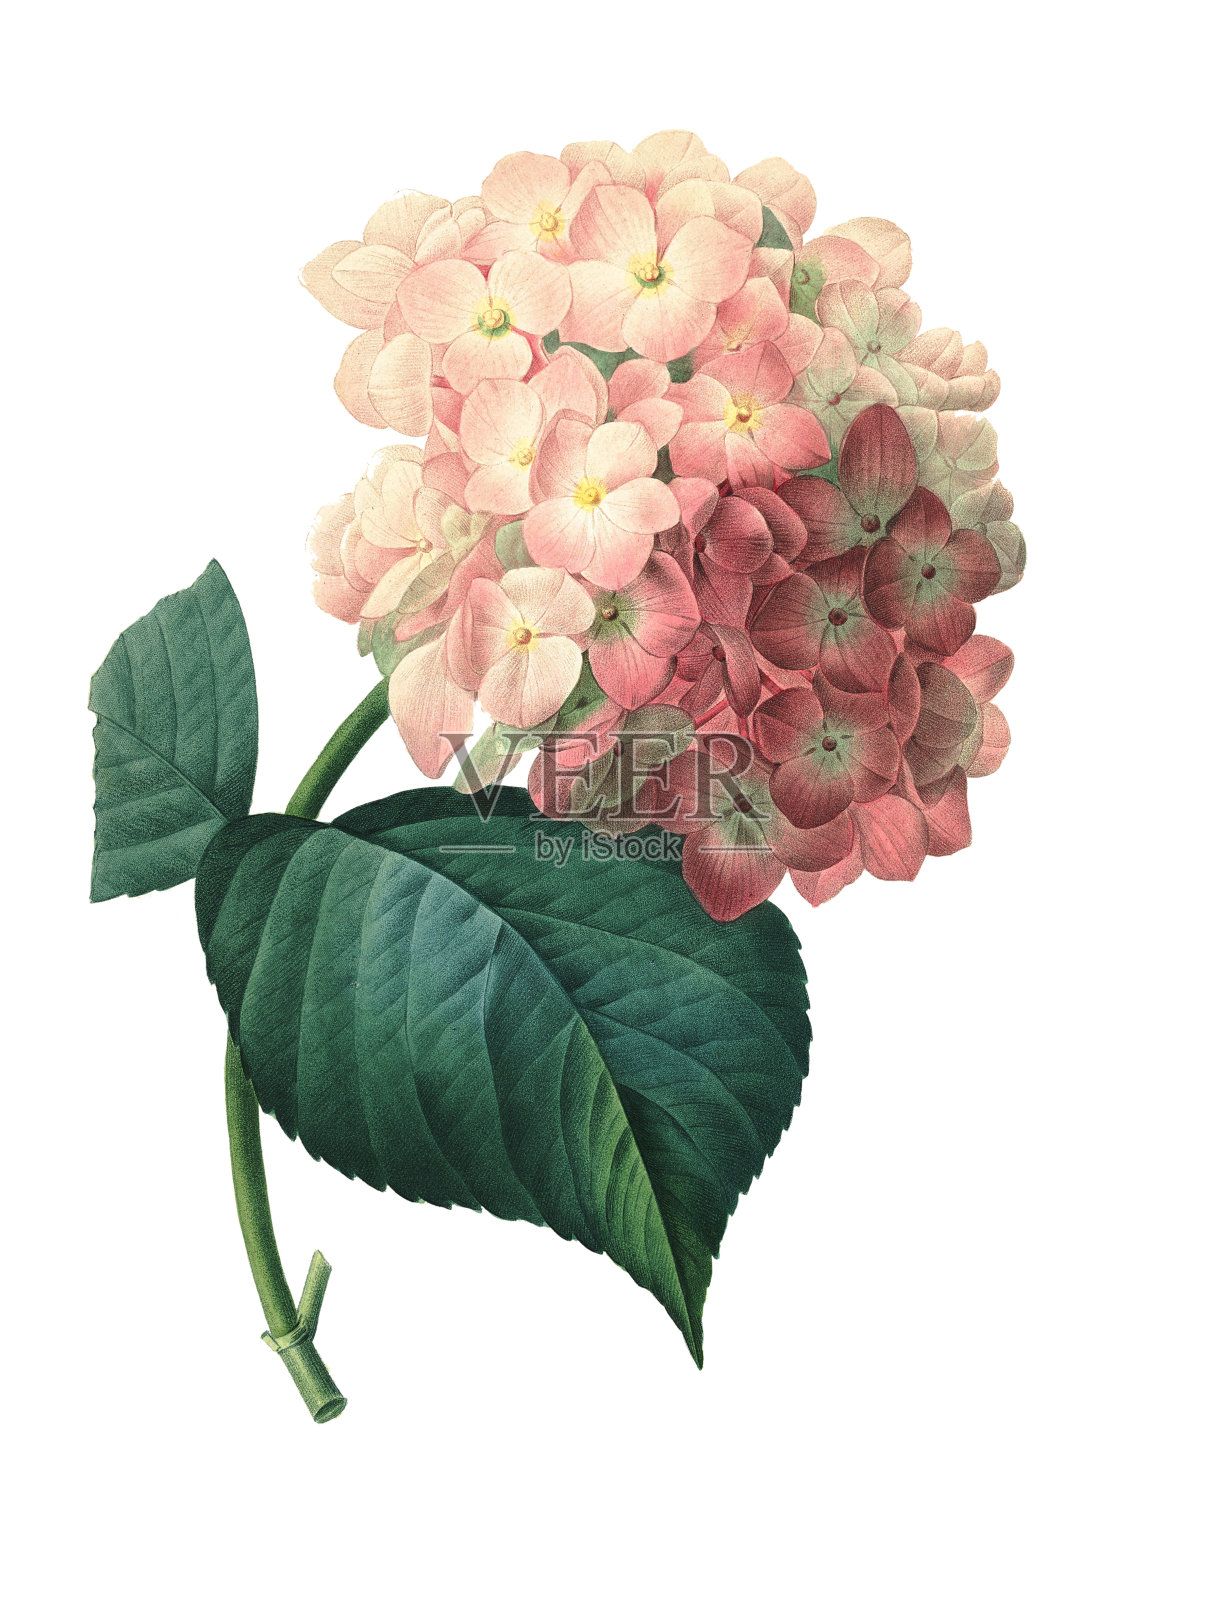 Hortensia | Redoute花卉插图设计元素图片